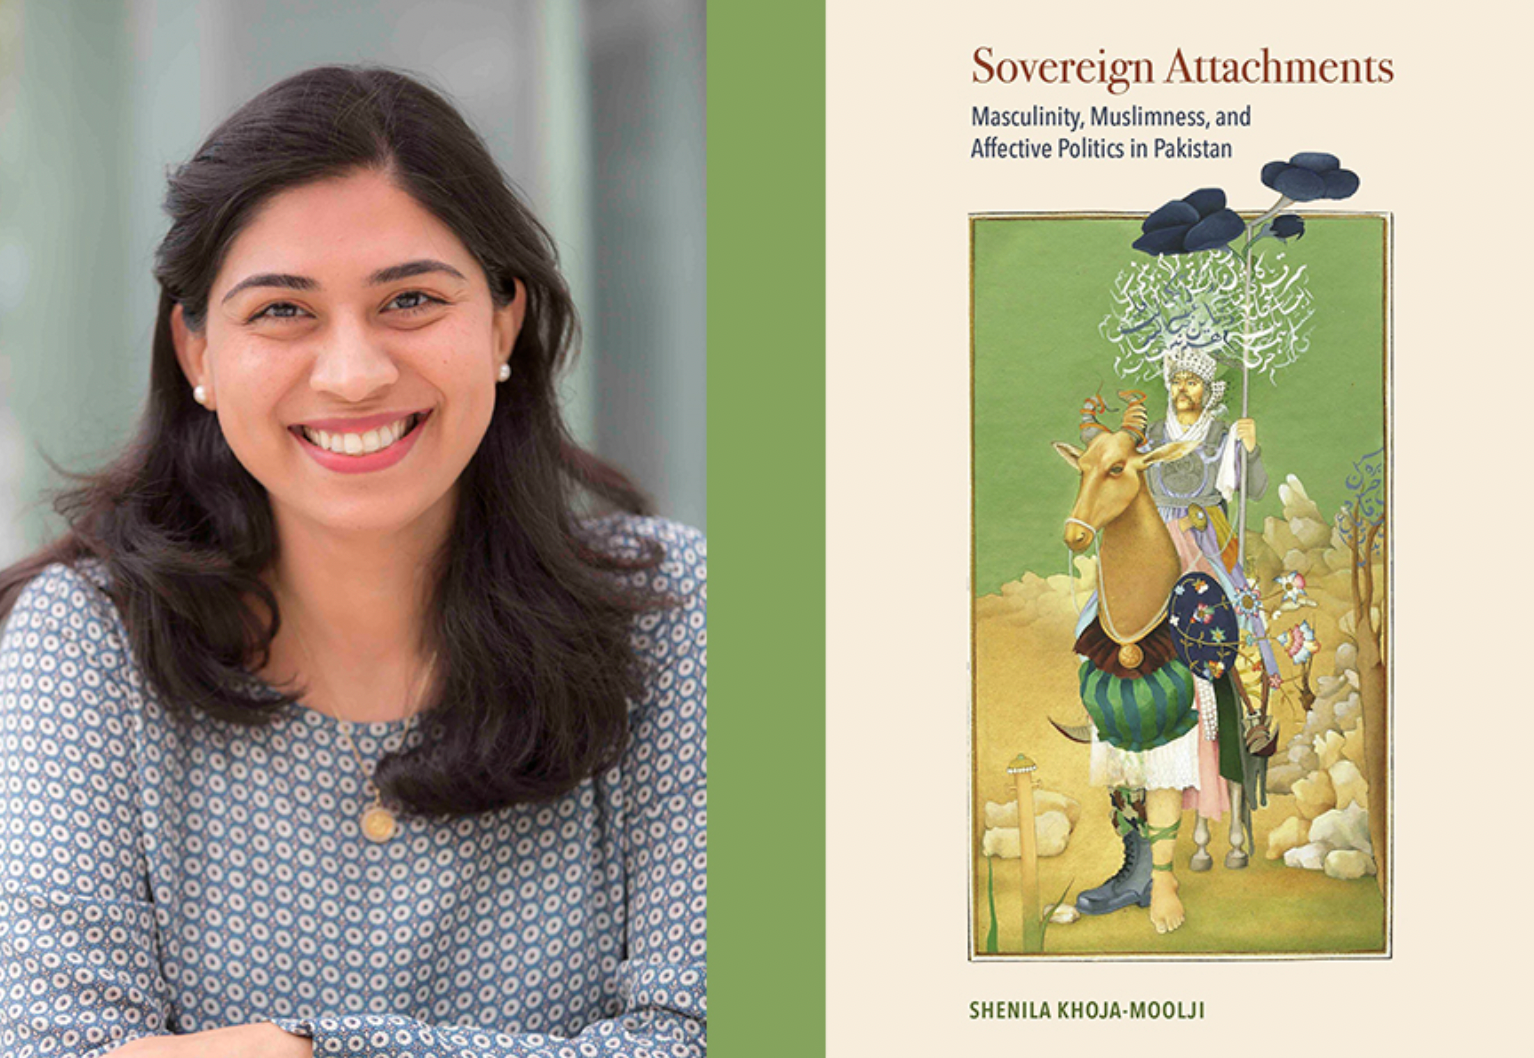 Professor Khoja-Moolji wins award for new book: Sovereign Attachments